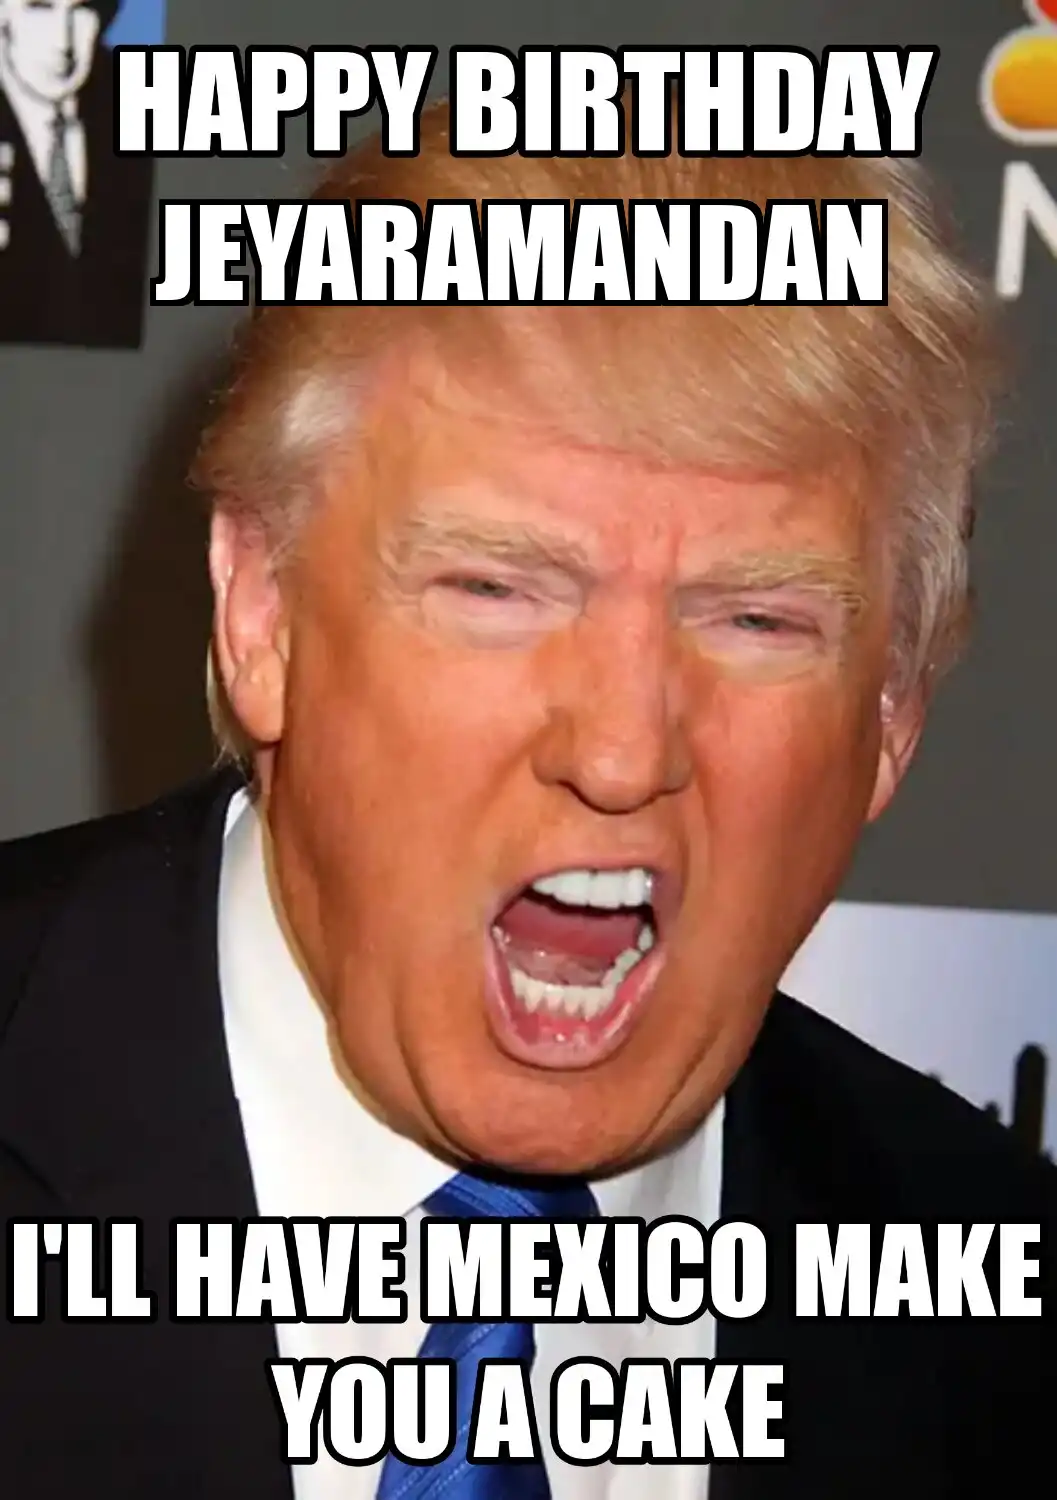 Happy Birthday Jeyaramandan Mexico Make You A Cake Meme